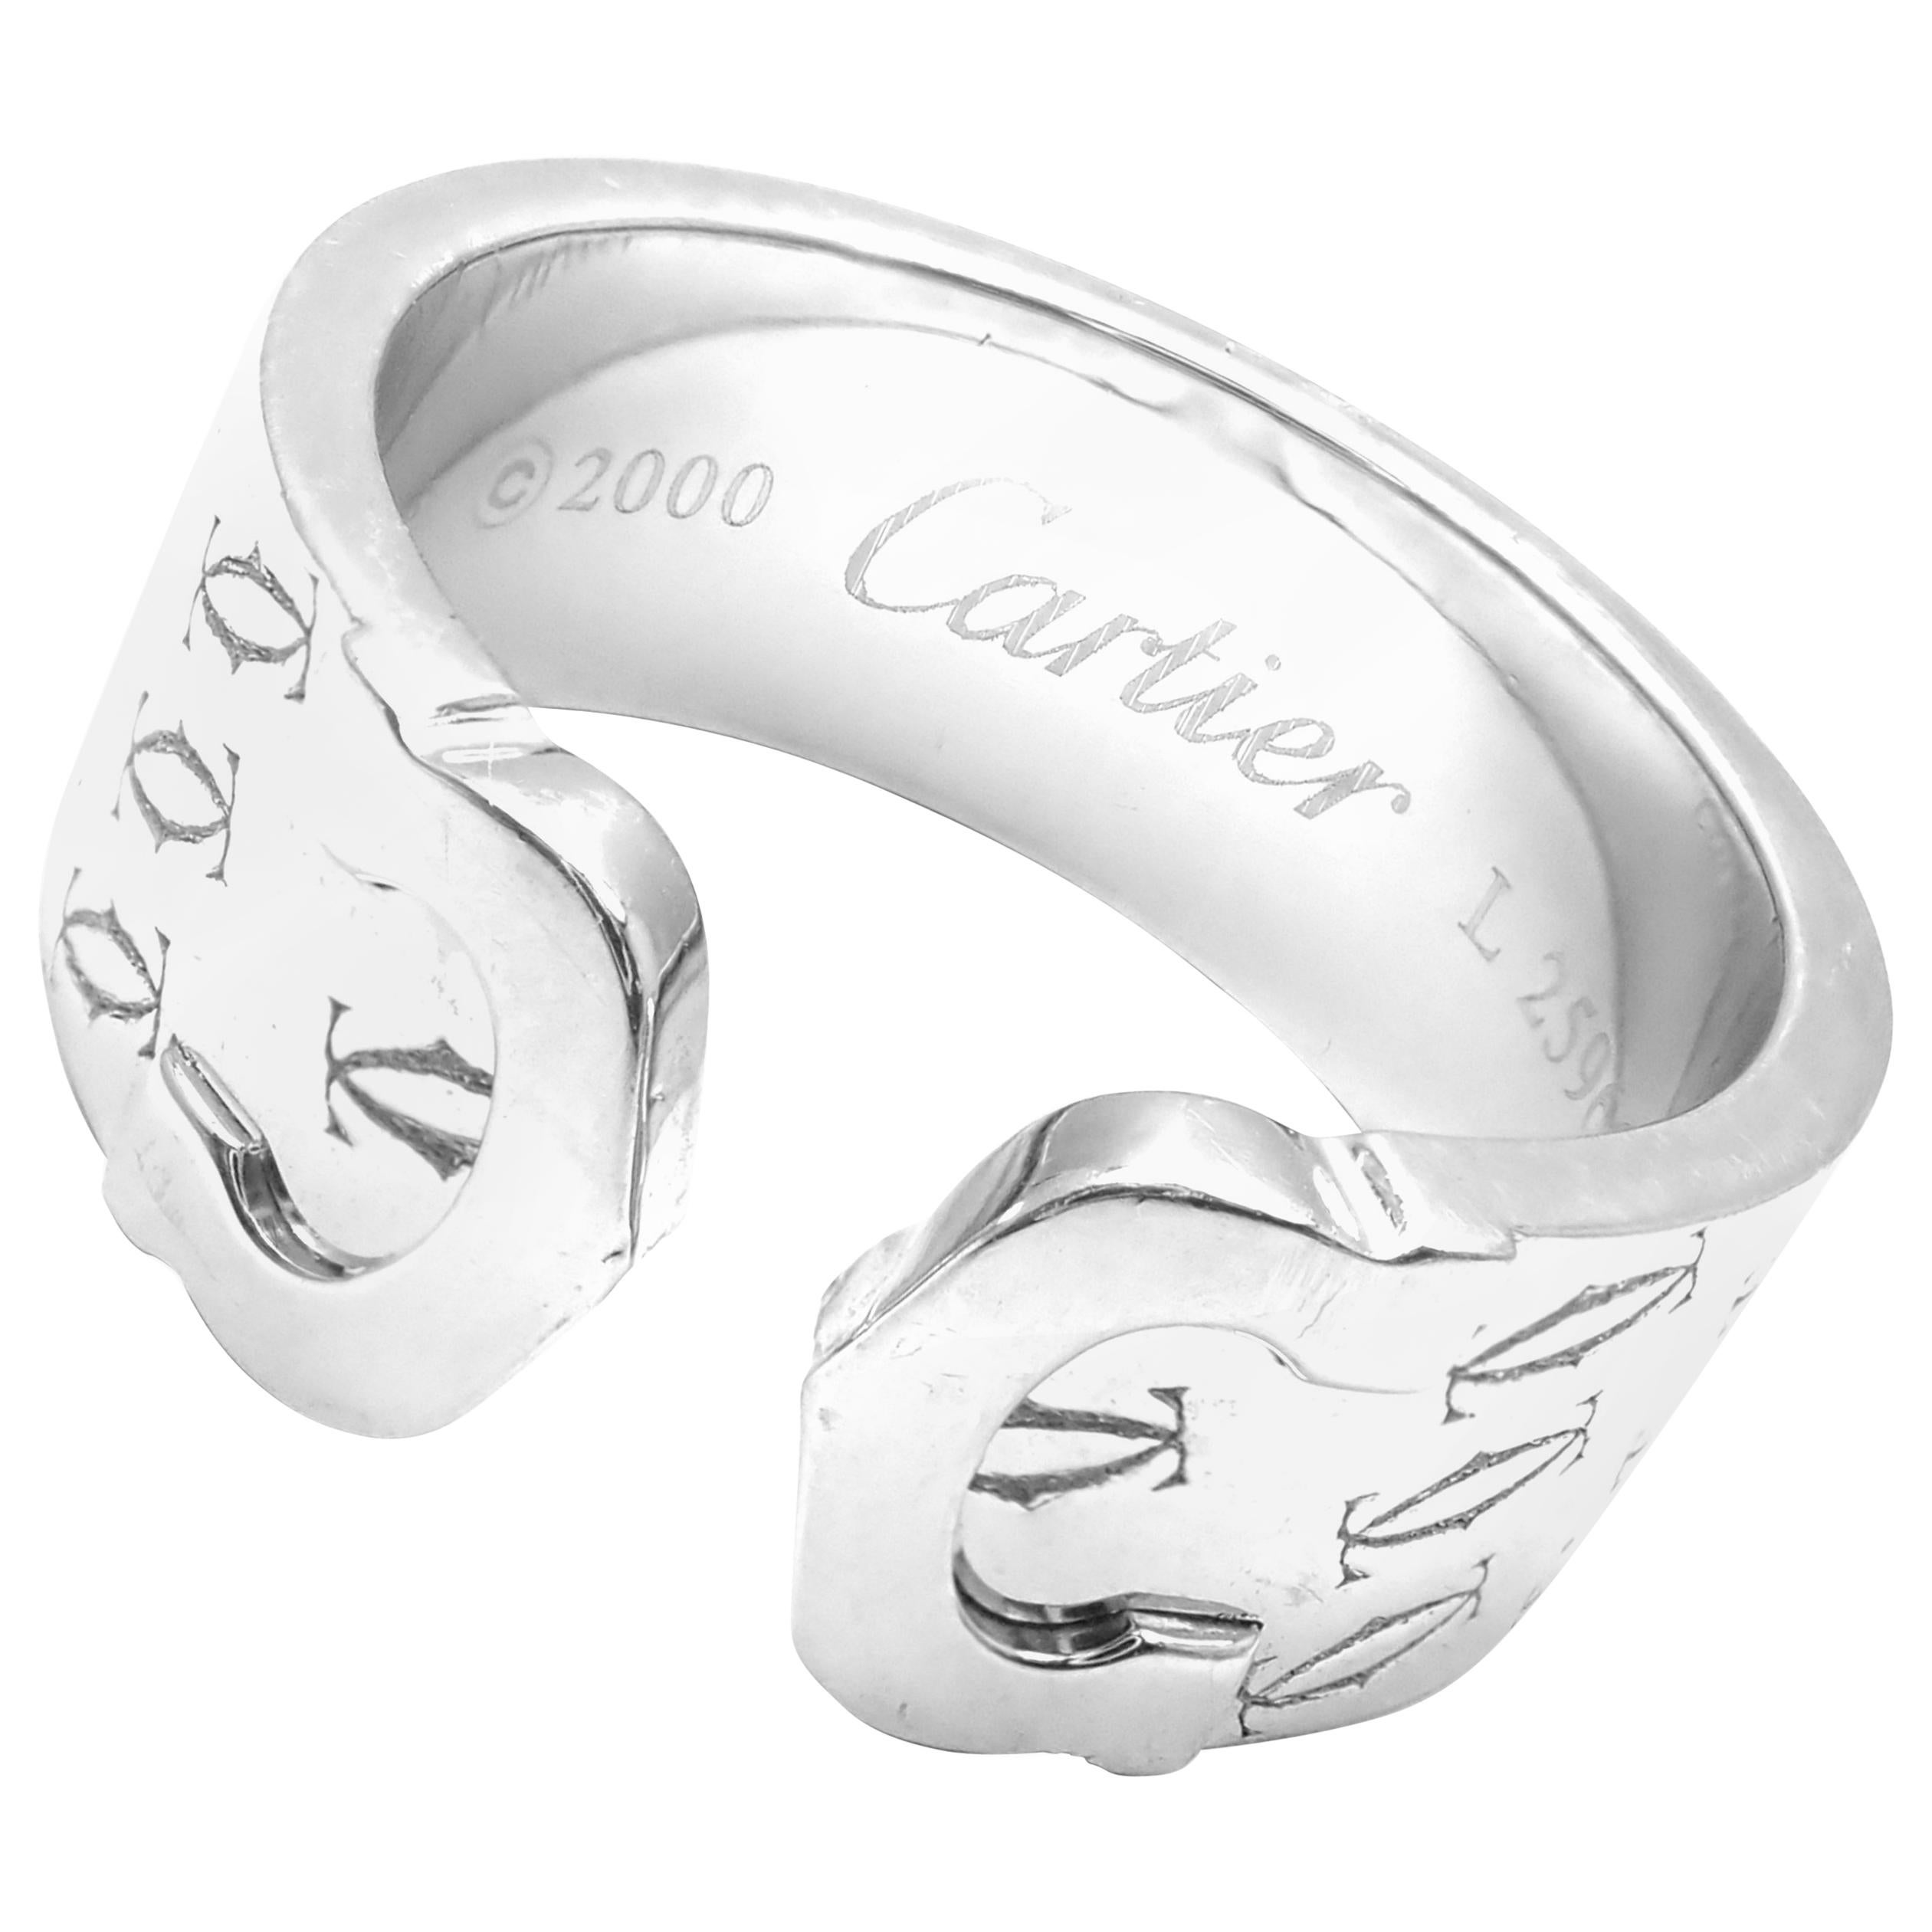 cartier c motif ring